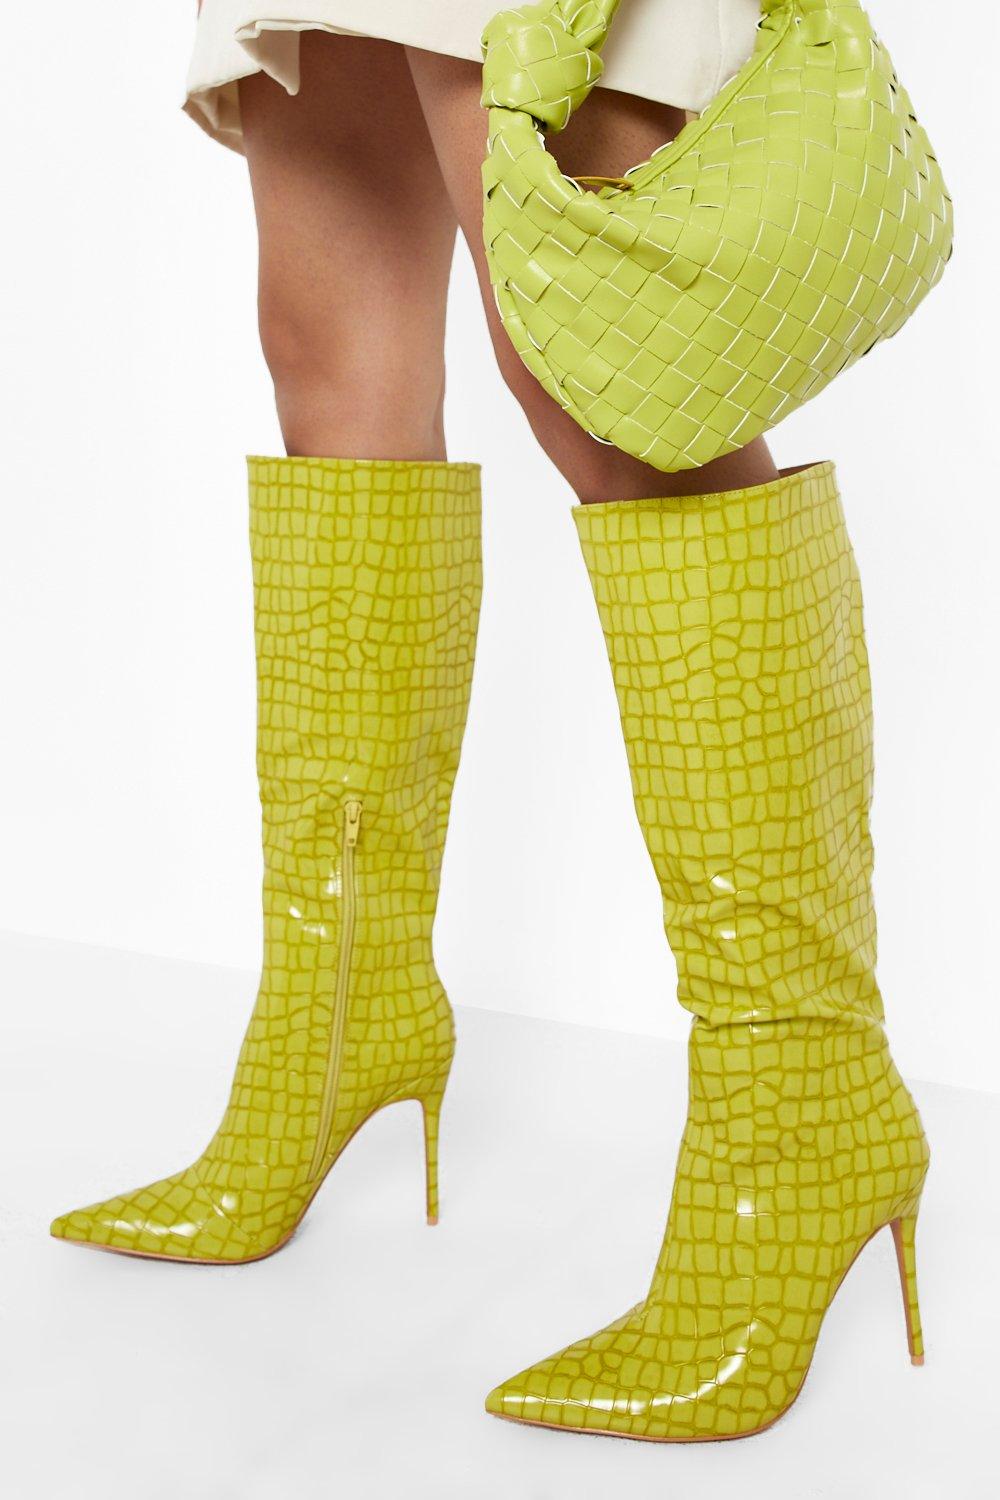 yellow croc boots